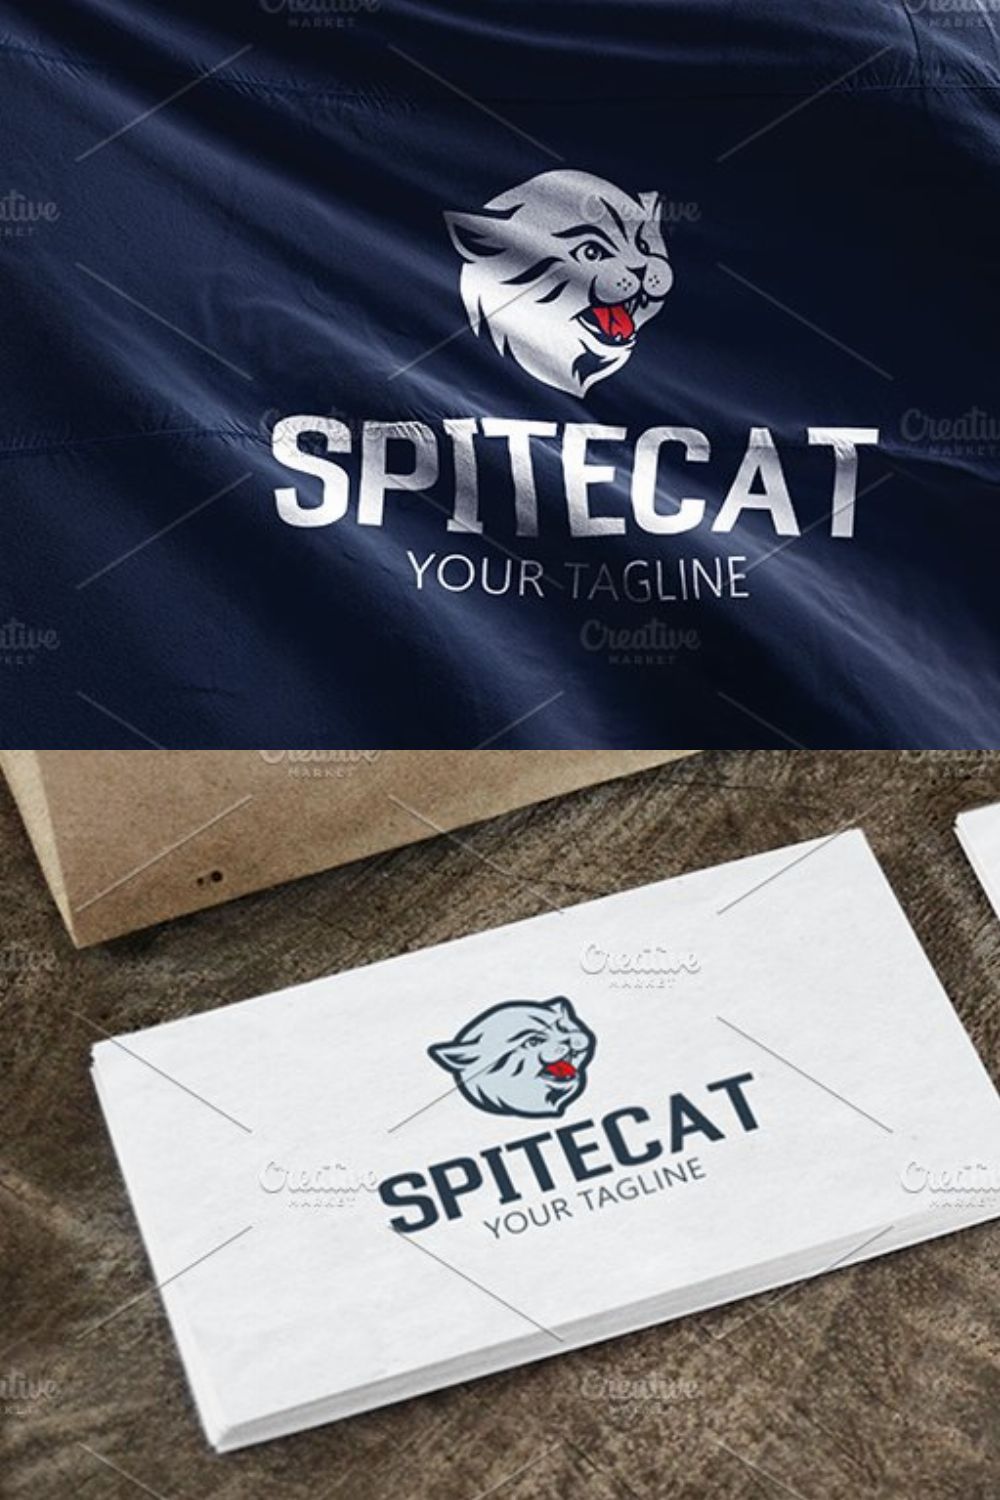 Spite Cat pinterest preview image.